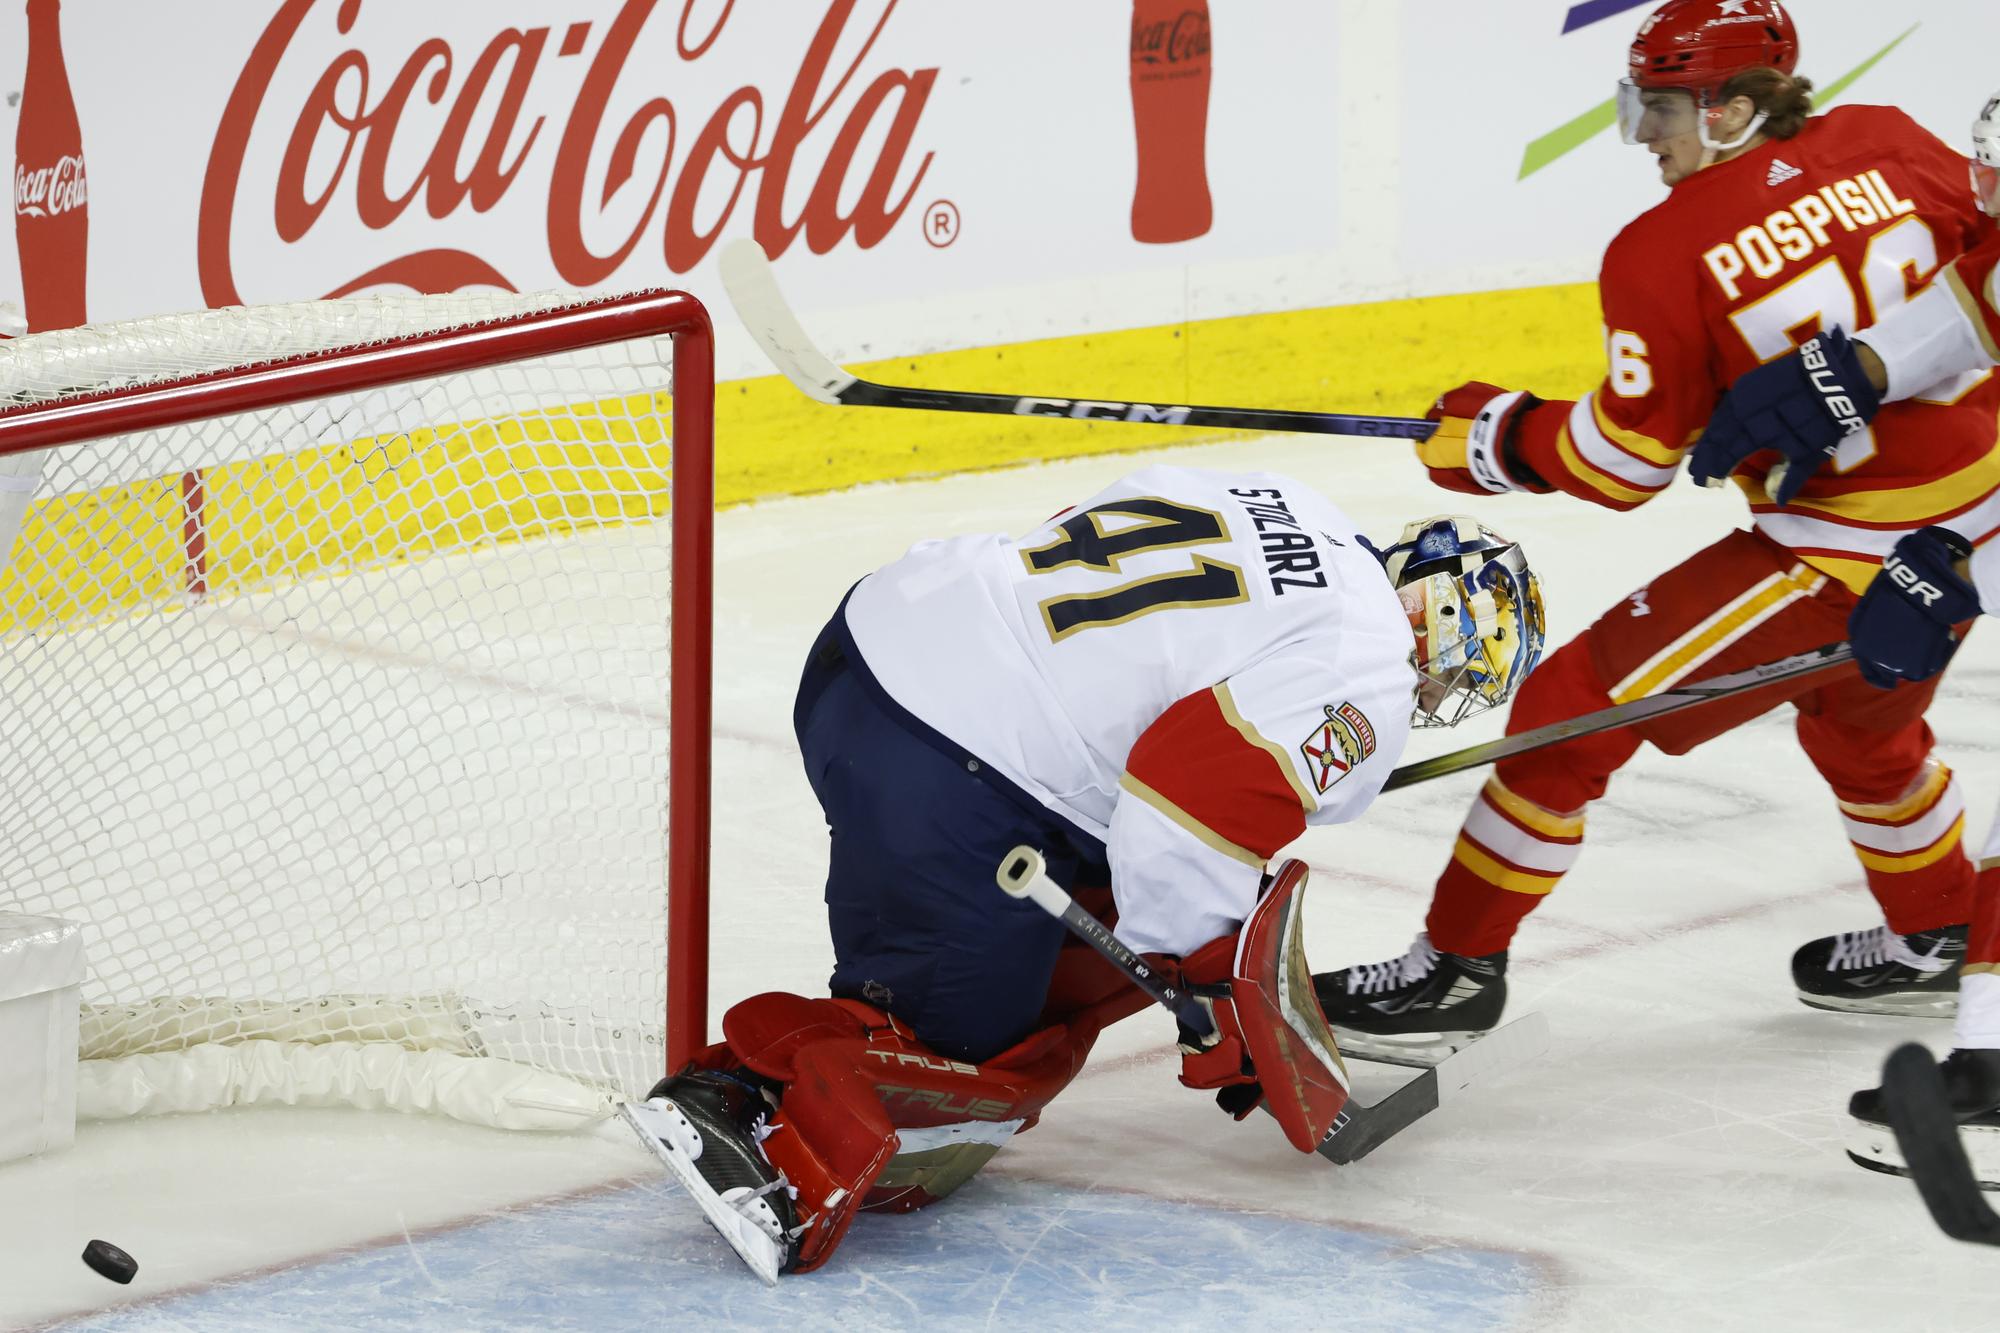 Slovenský hokejista v drese Calgary Flames Martin Pospíšil strieľa gól za chrbát brankára Floridy Panthers Anthonyho Stolarza.